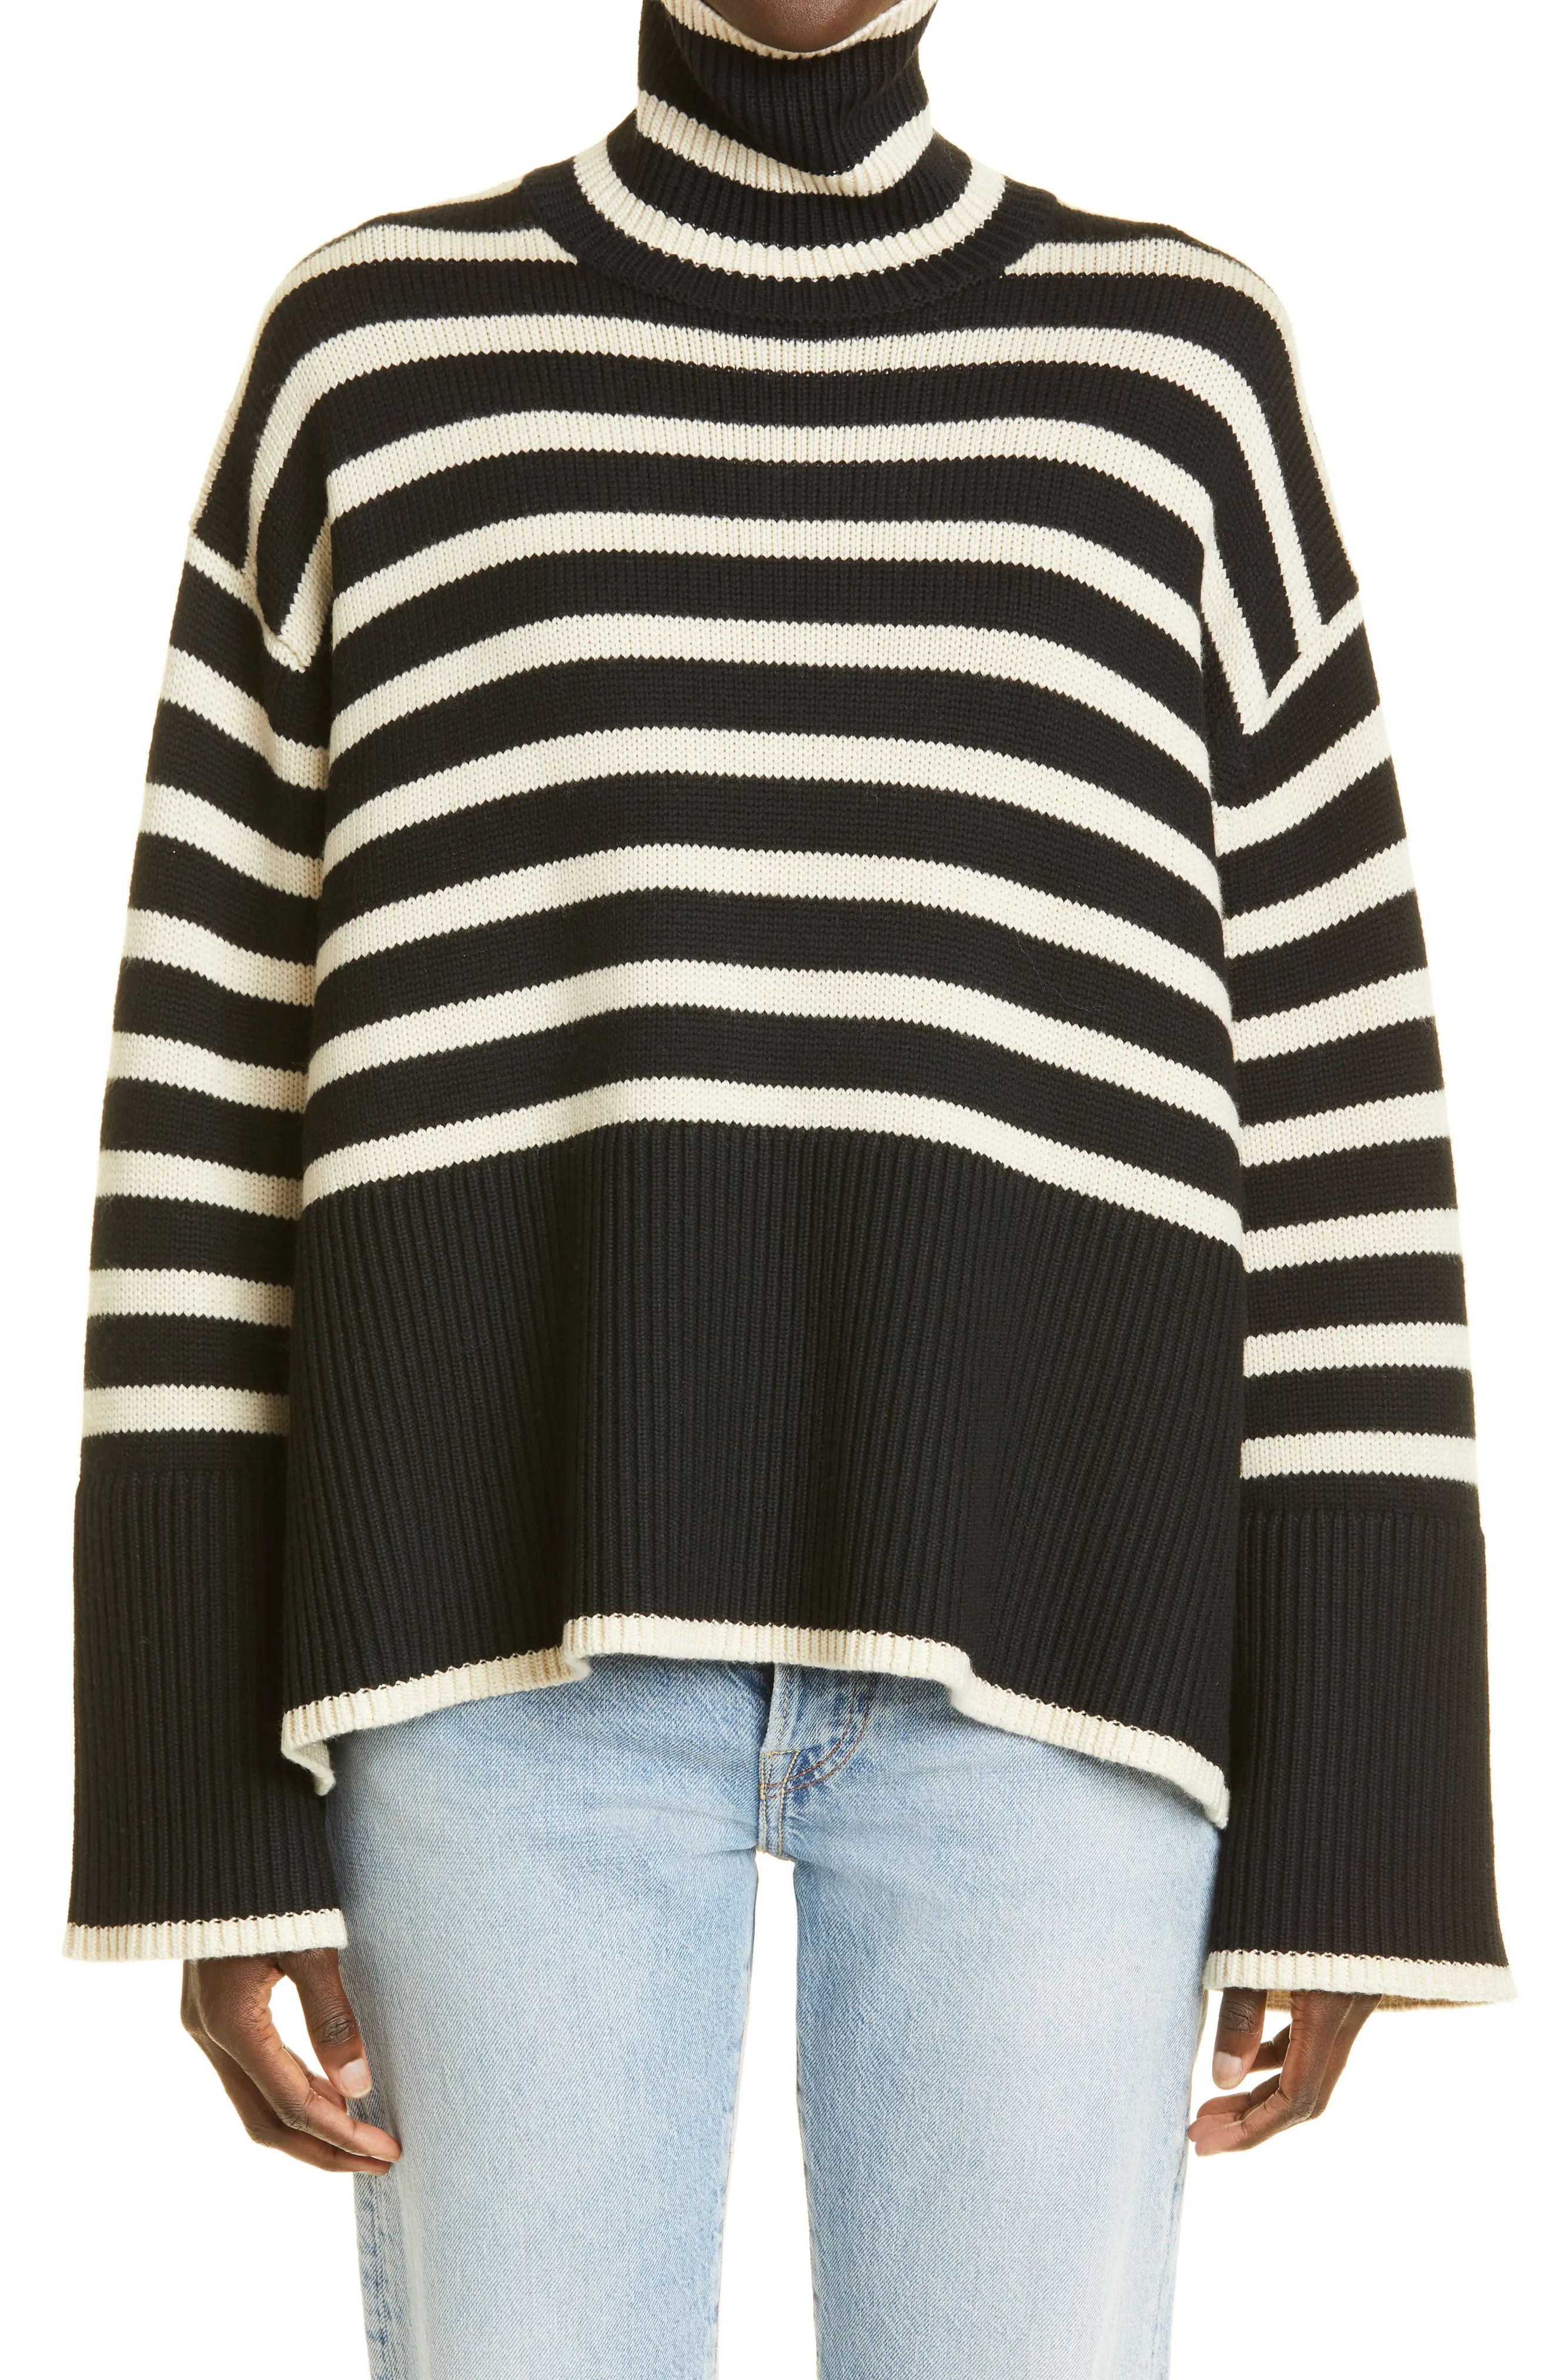 Toteme Stripe Wool Blend Turtleneck Sweater, Size Medium in Black Stripe at Nordstrom | Nordstrom